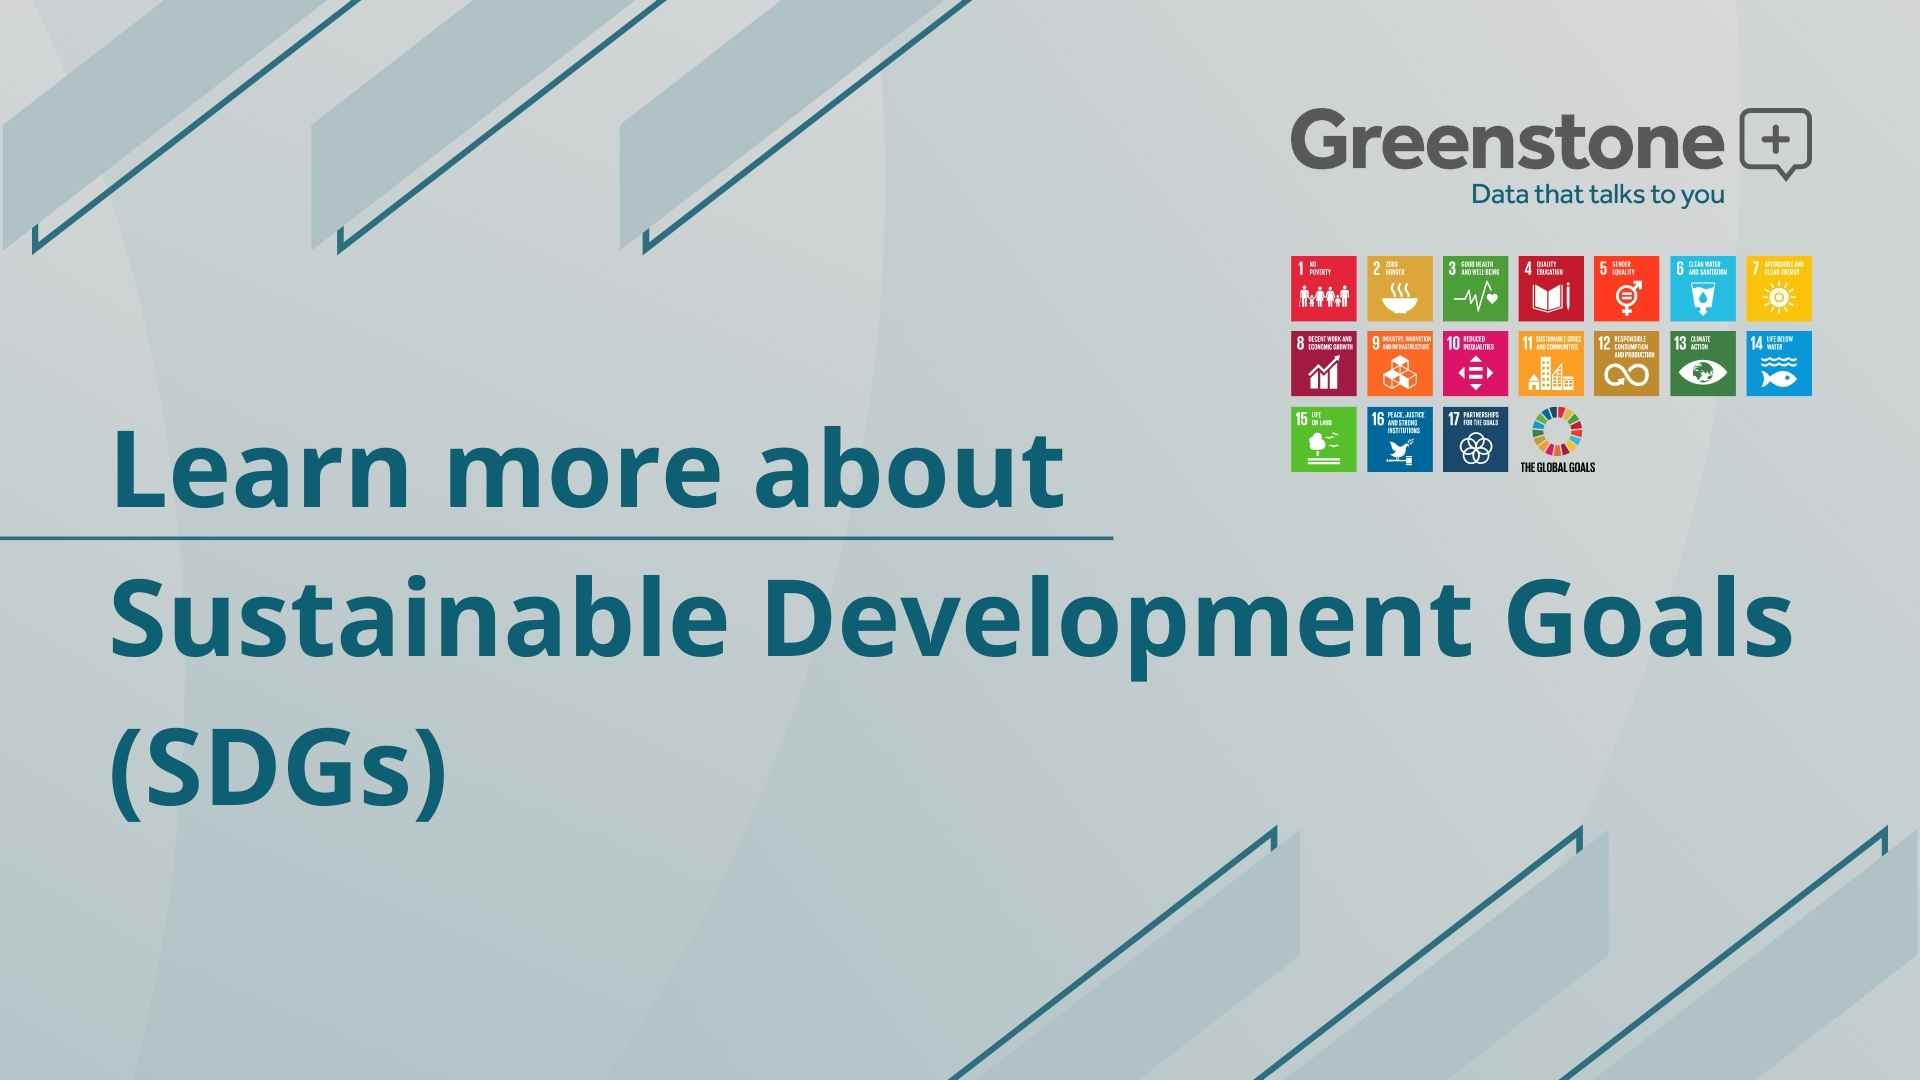 Greenstone & Sustainable Development Goals (SDGs)